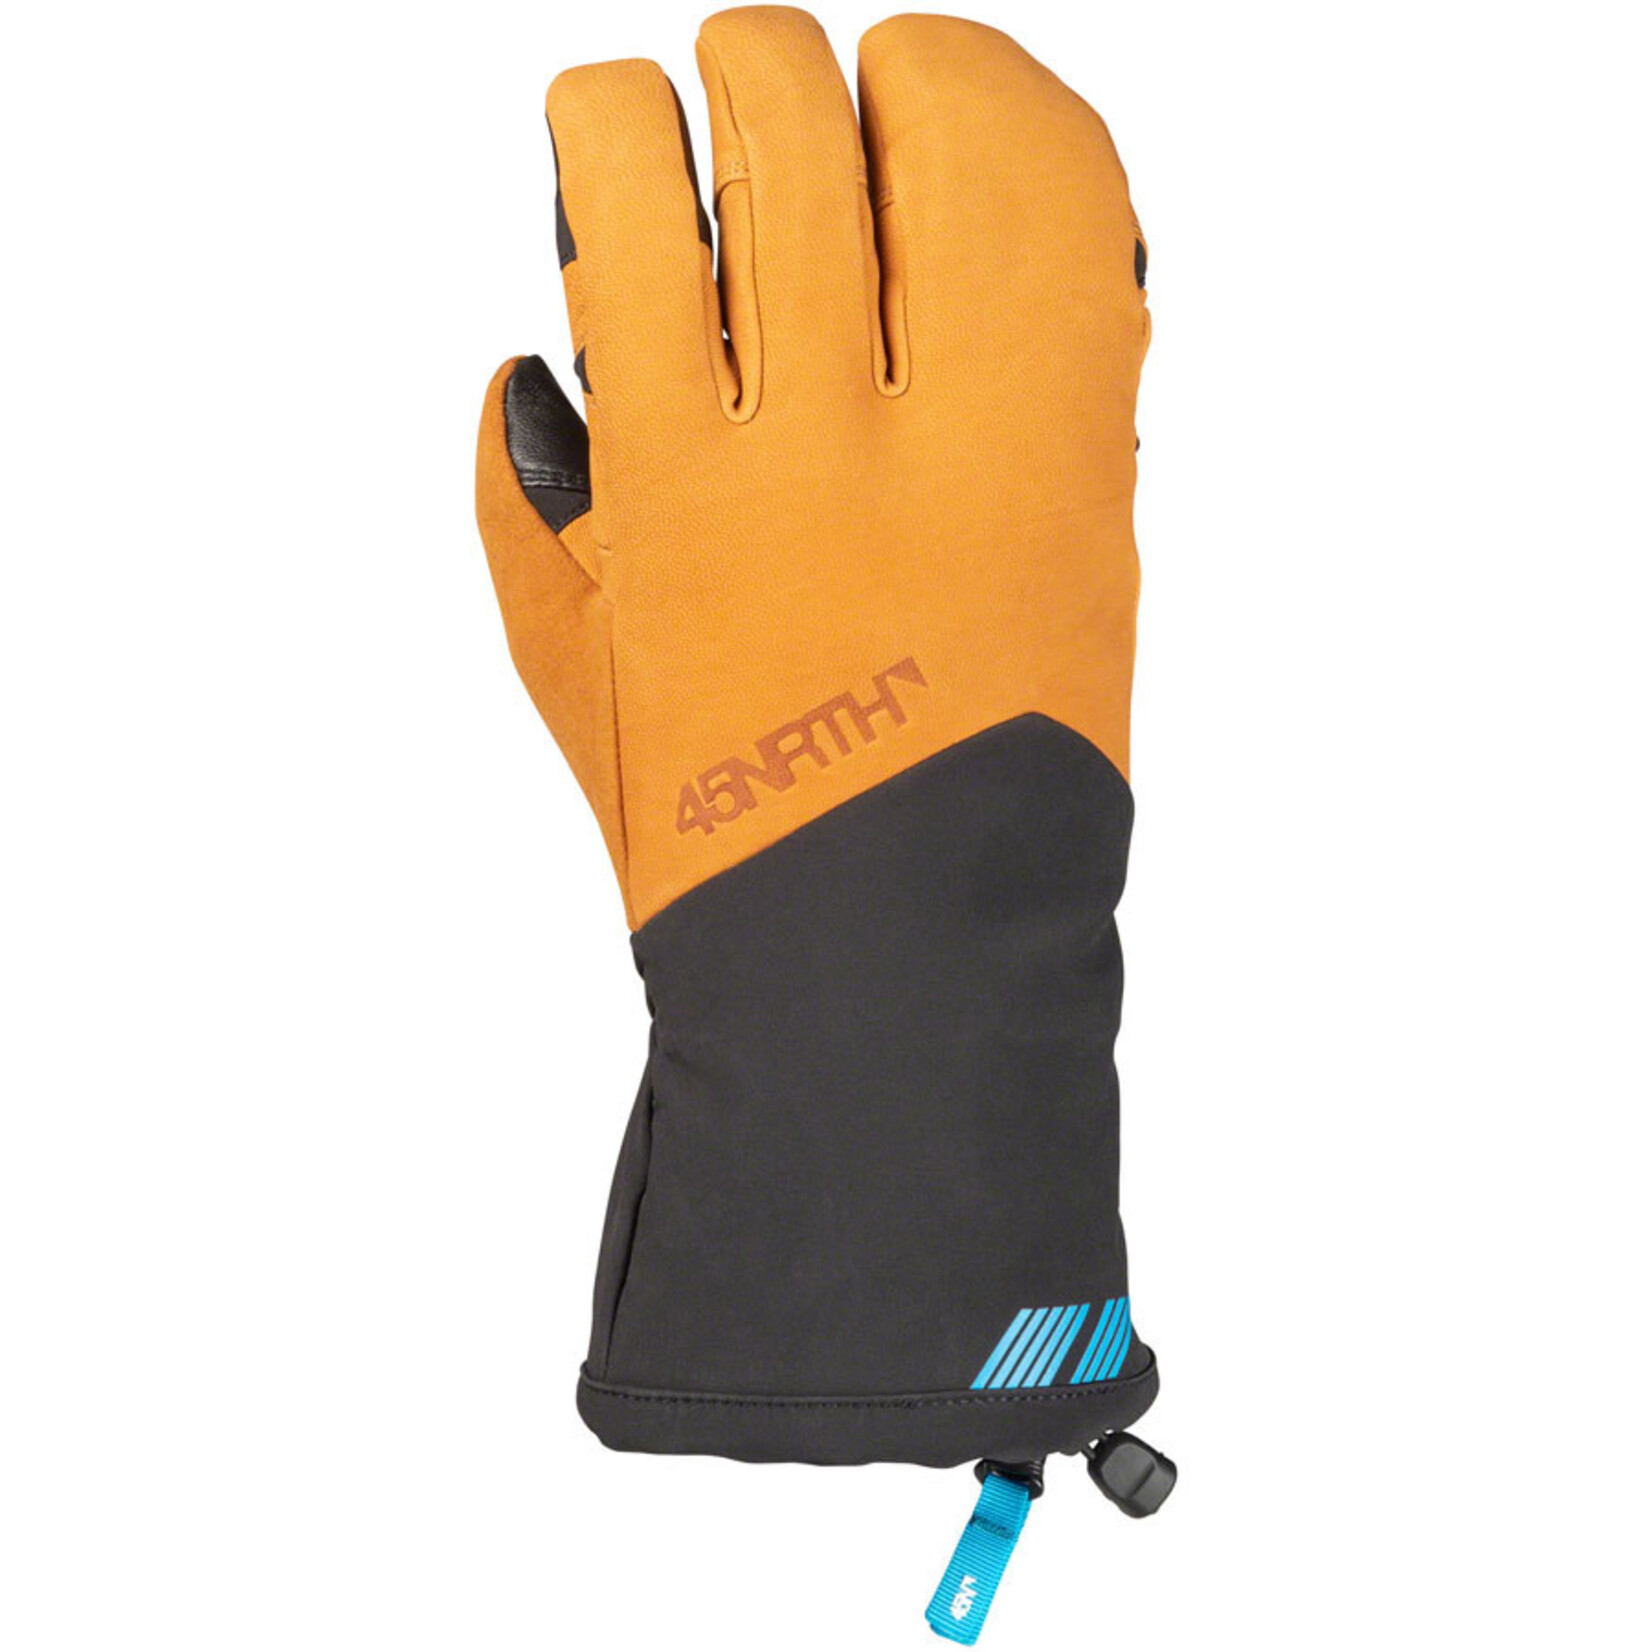 45NRTH 45NRTH Sturmfist 4 LTR Leather Full Finger Glove, Tan/Black, 23/24